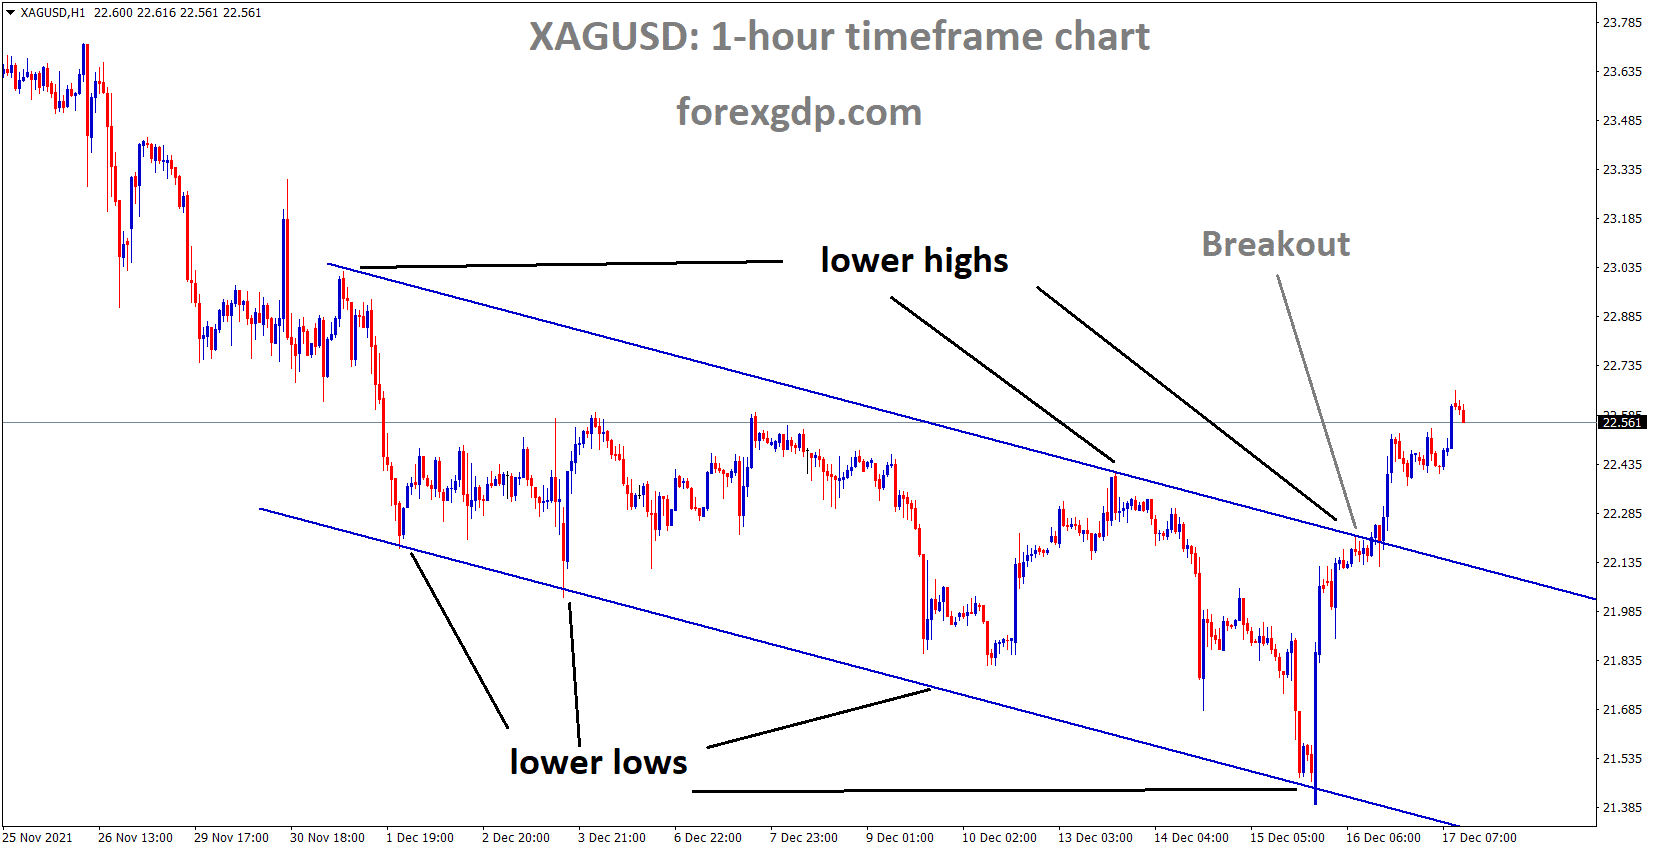 XAGUSD Silver price has broken the Descending channel